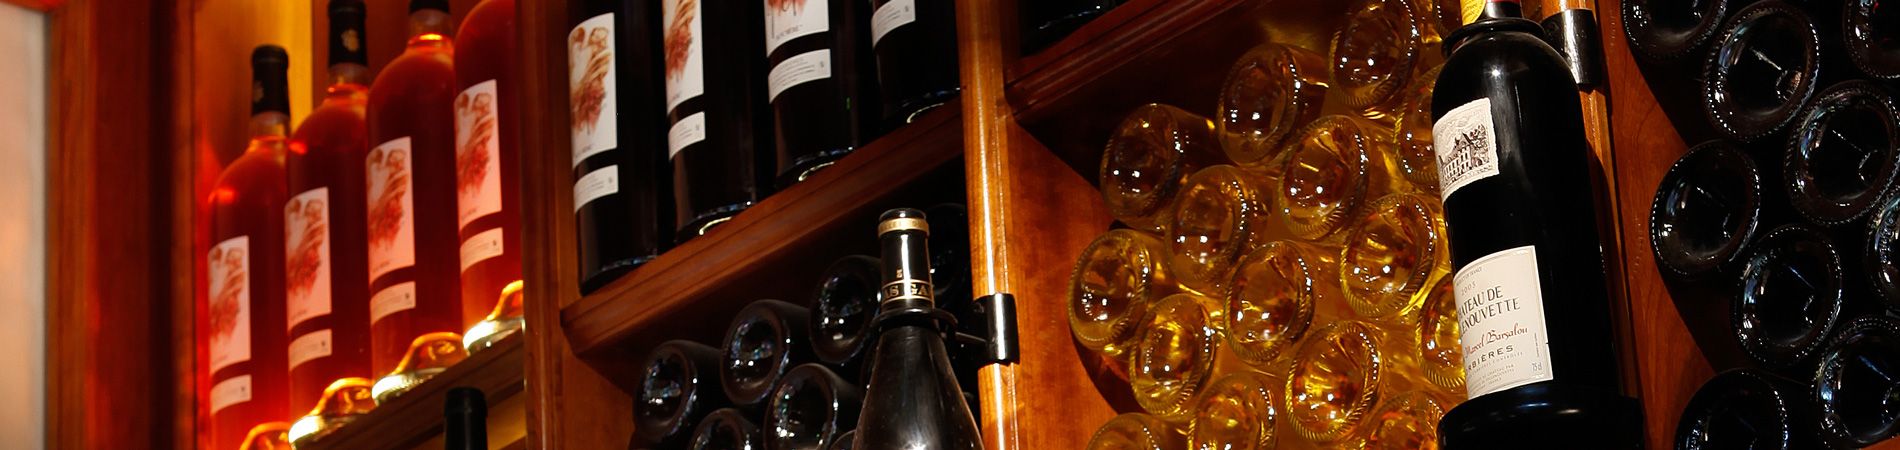 cave vins salle à manger des Grands Buffets narbonne